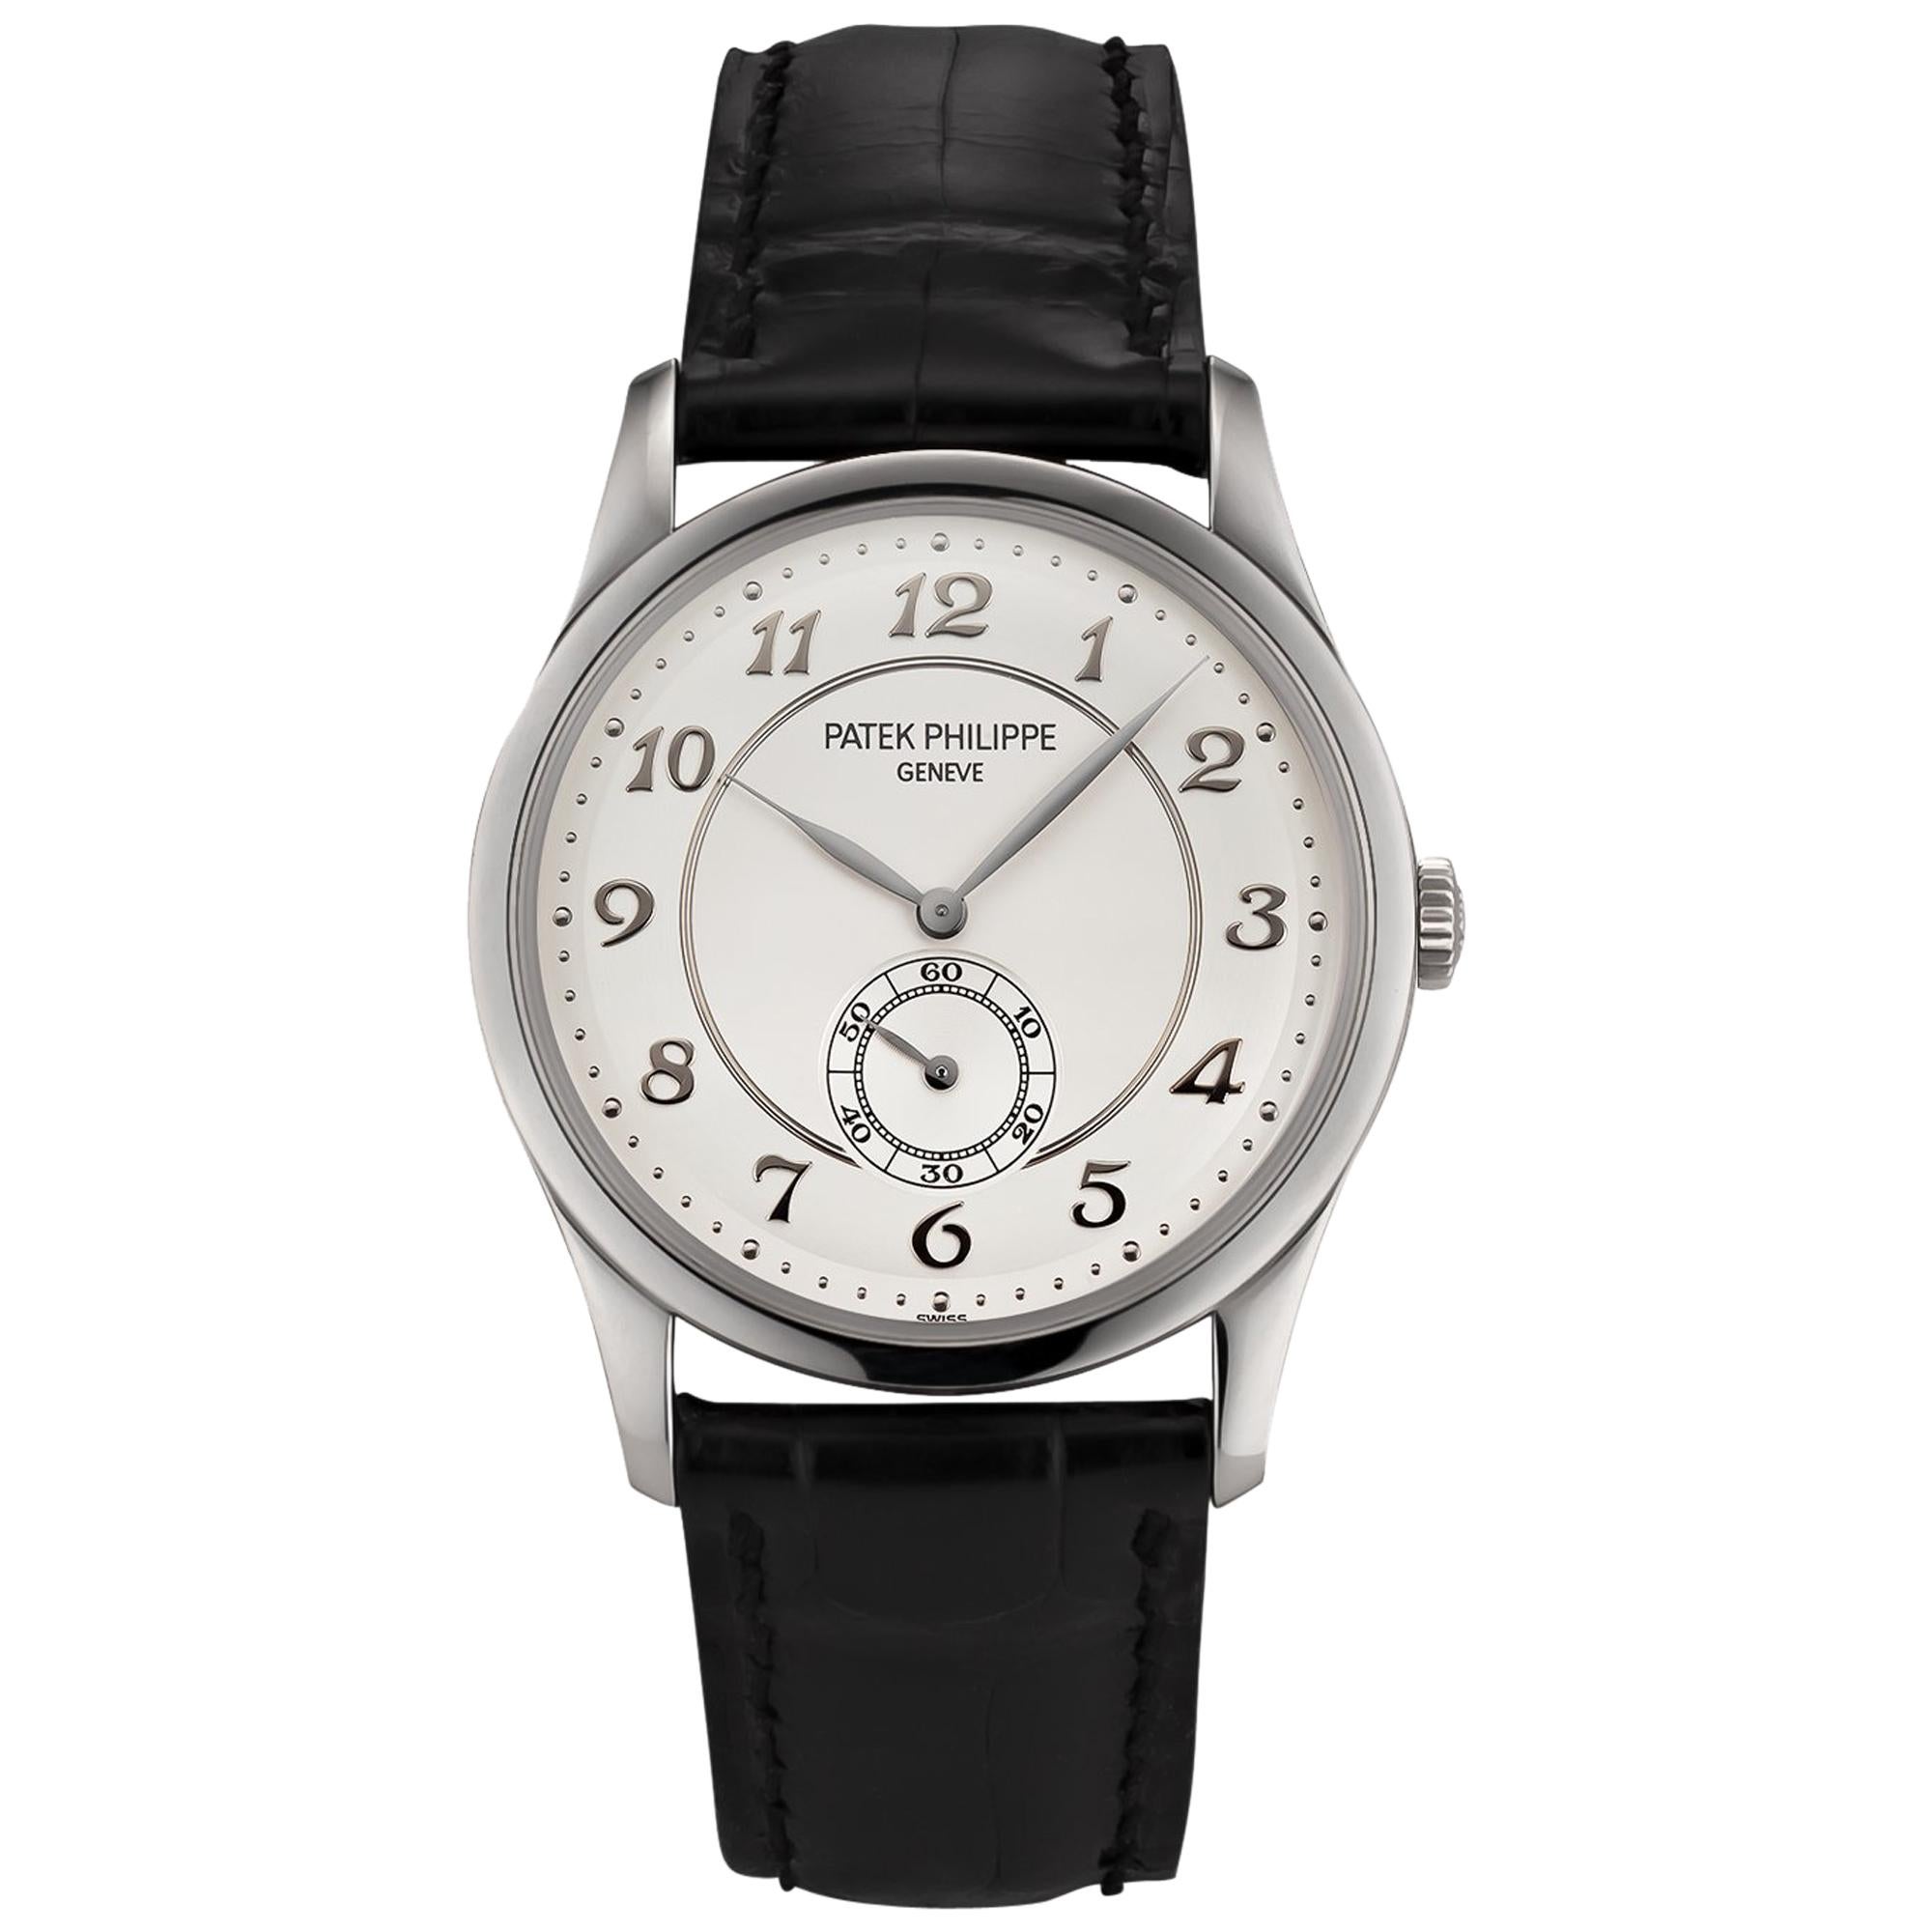 Vintage Patek Philippe Calatrava Ref 5196P-001 Men's Wristwatch